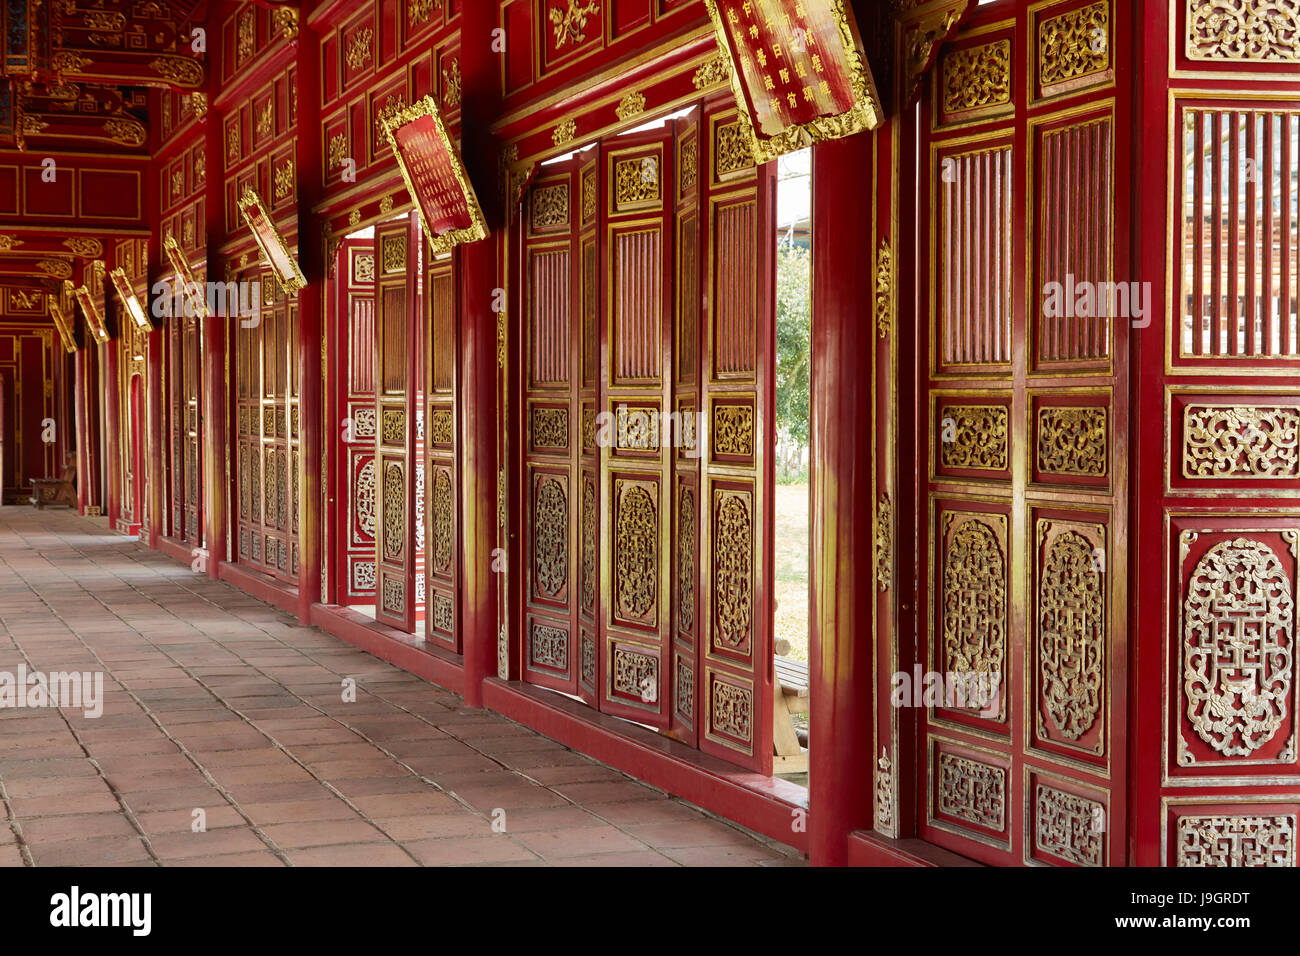 Corridor and red doors in the Forbidden Purple City, historic Hue Citadel (Imperial City), Hue, North Central Coast, Vietnam Stock Photo